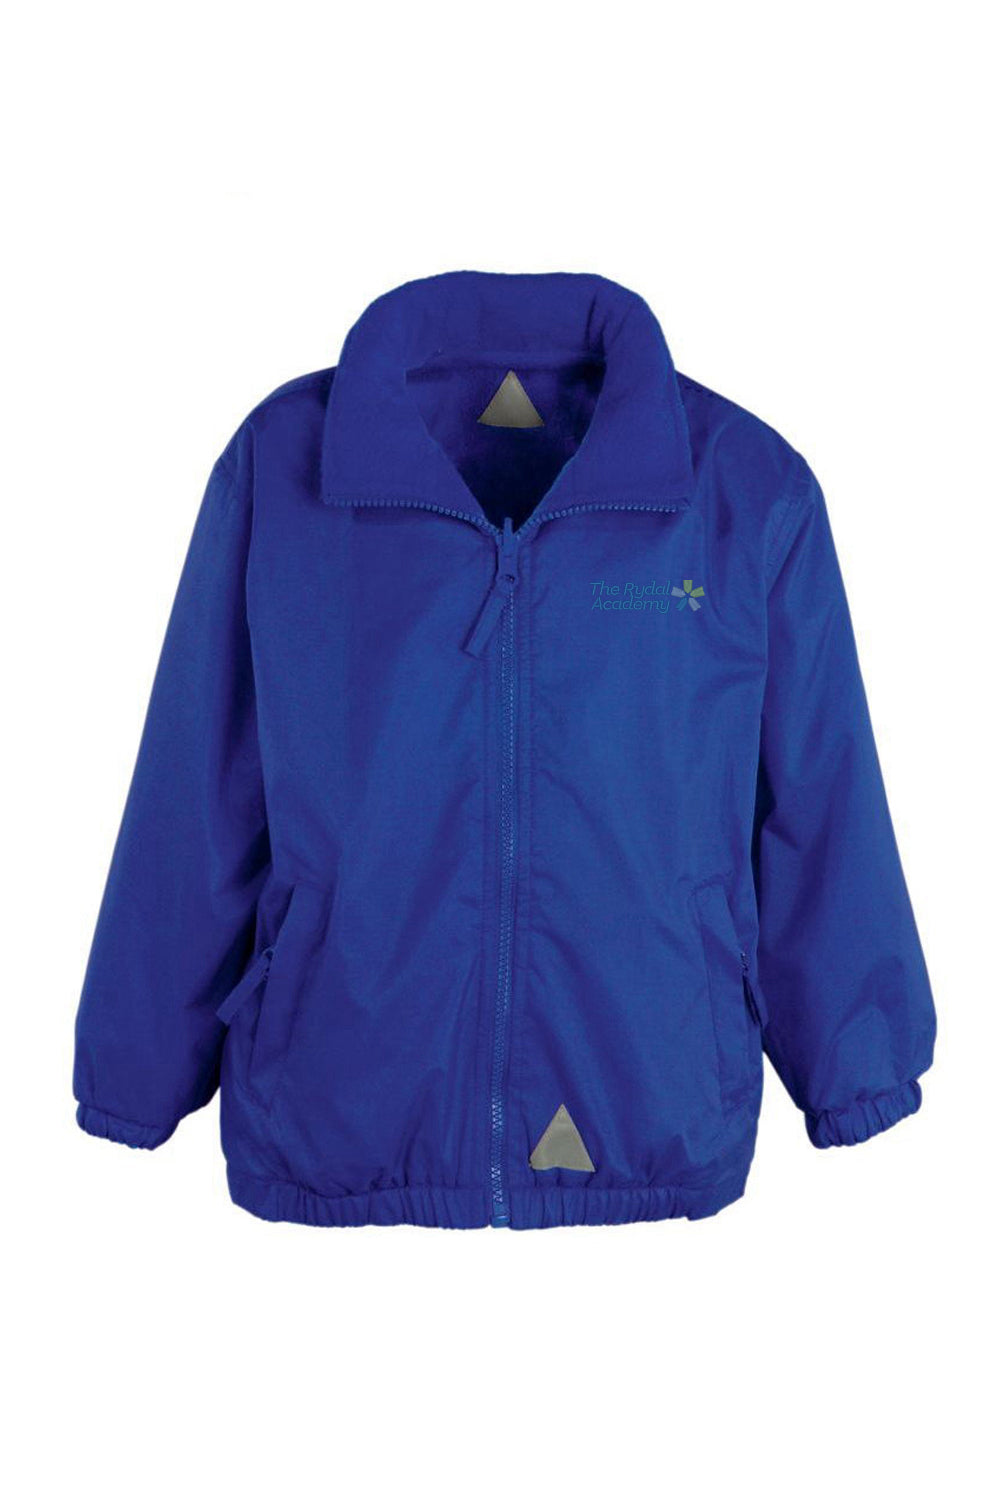 Rydal Academy Royal Blue Shower Jacket